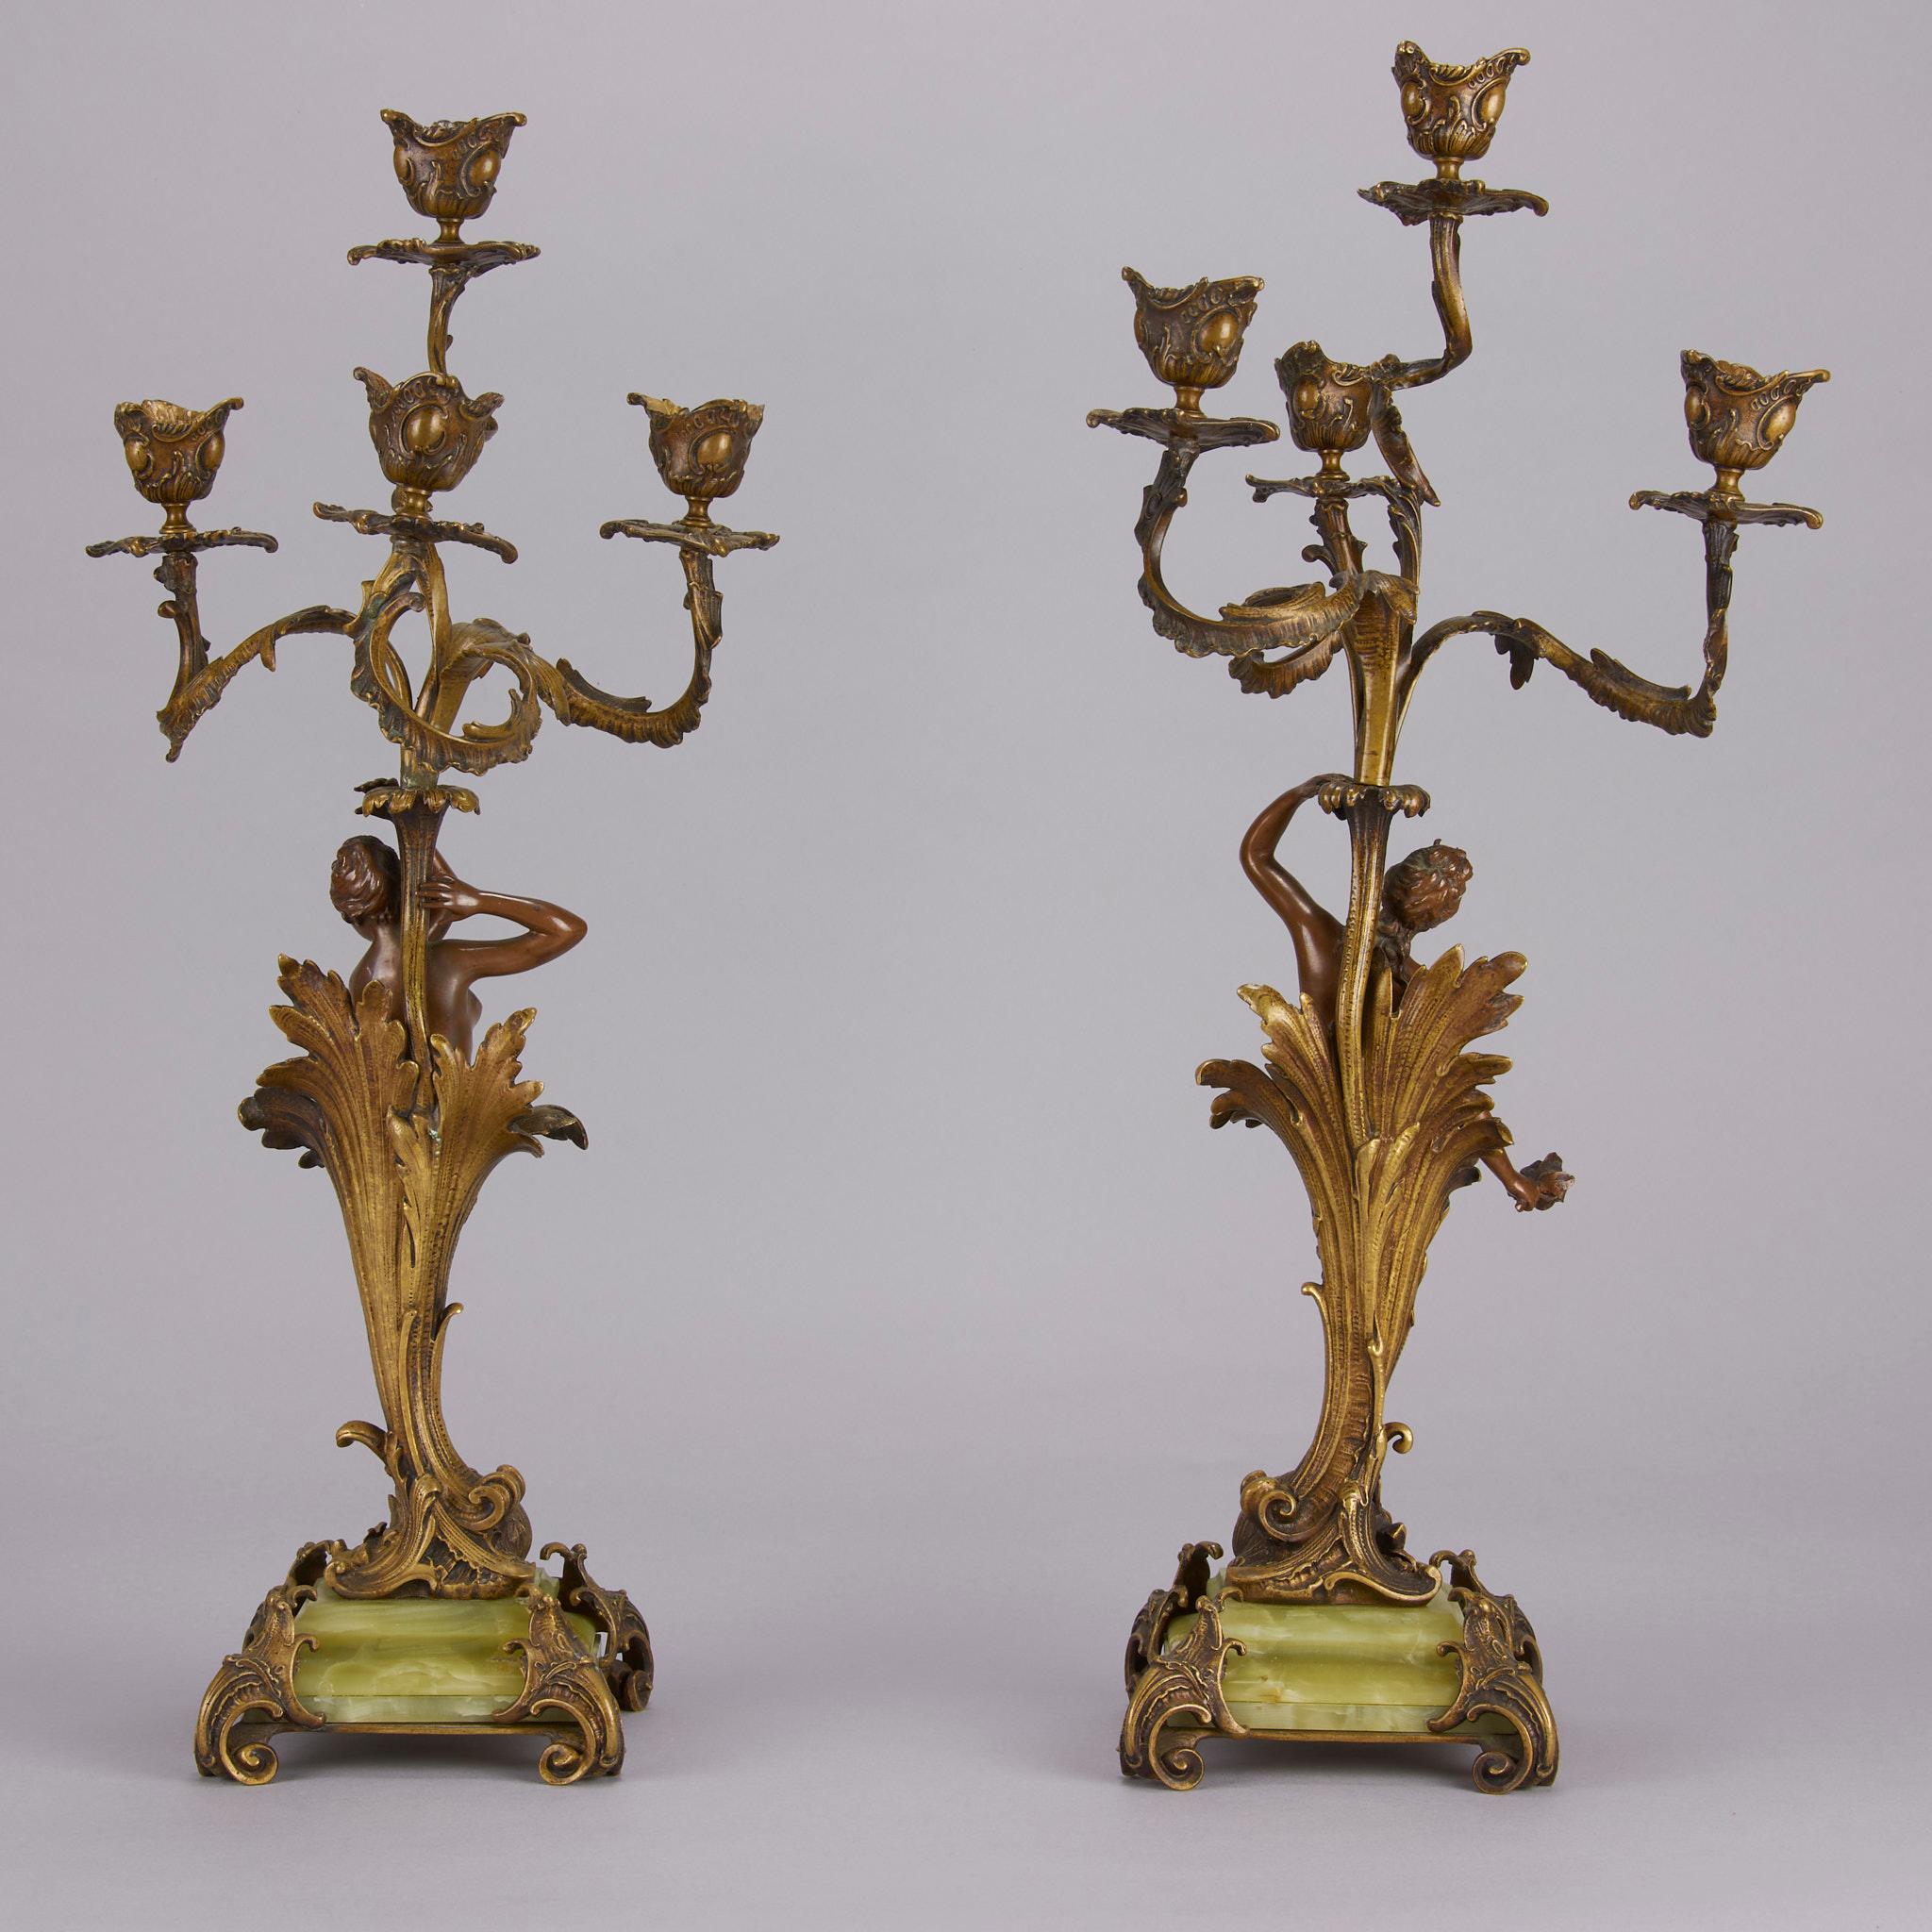 20th Century Art Nouveau Bronze Pair of Candelabra, circa 1900